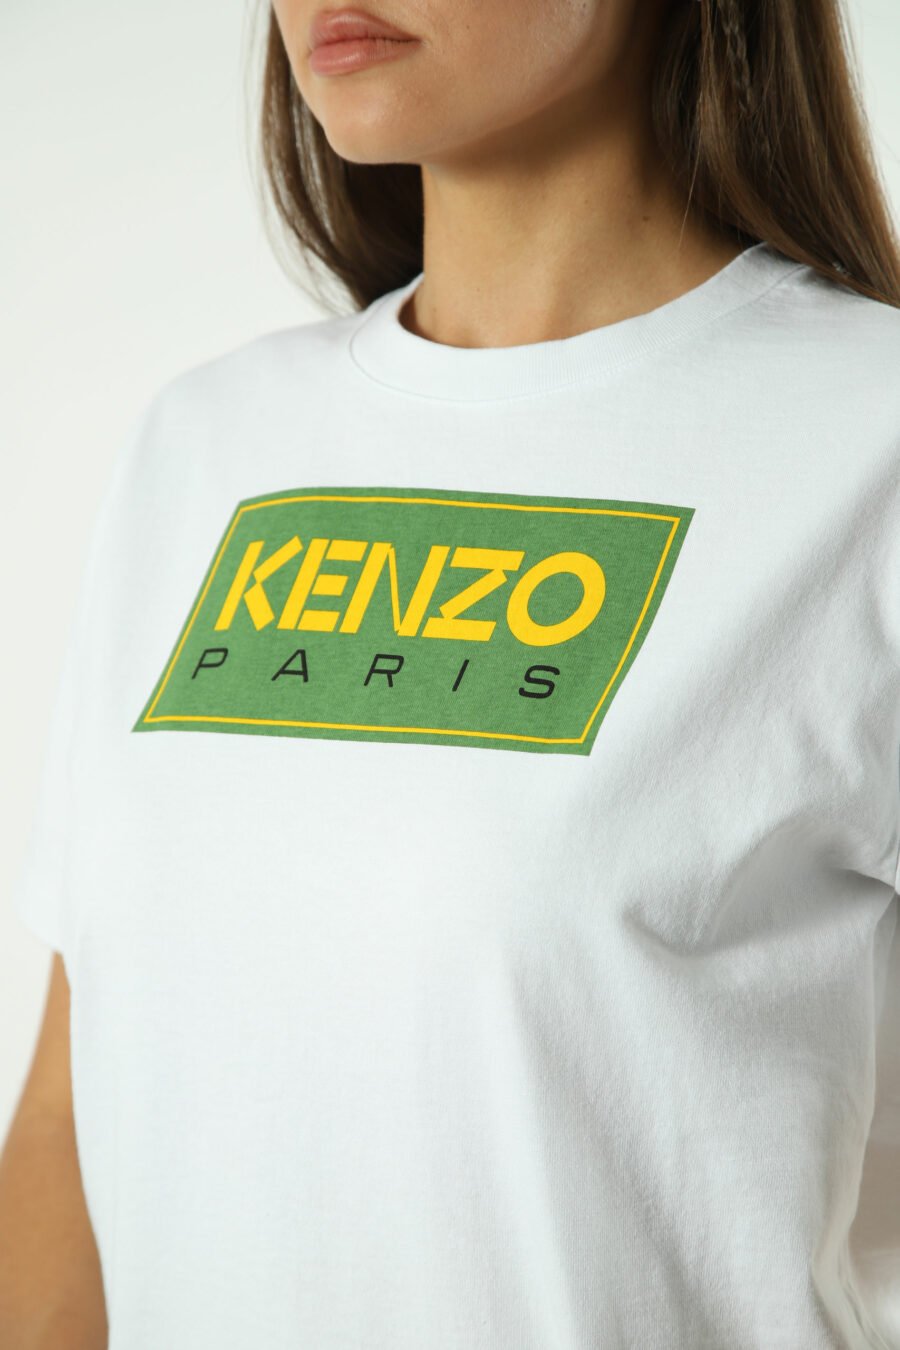 T-shirt blanc avec maxilogo vert "paris" - Photos 1331